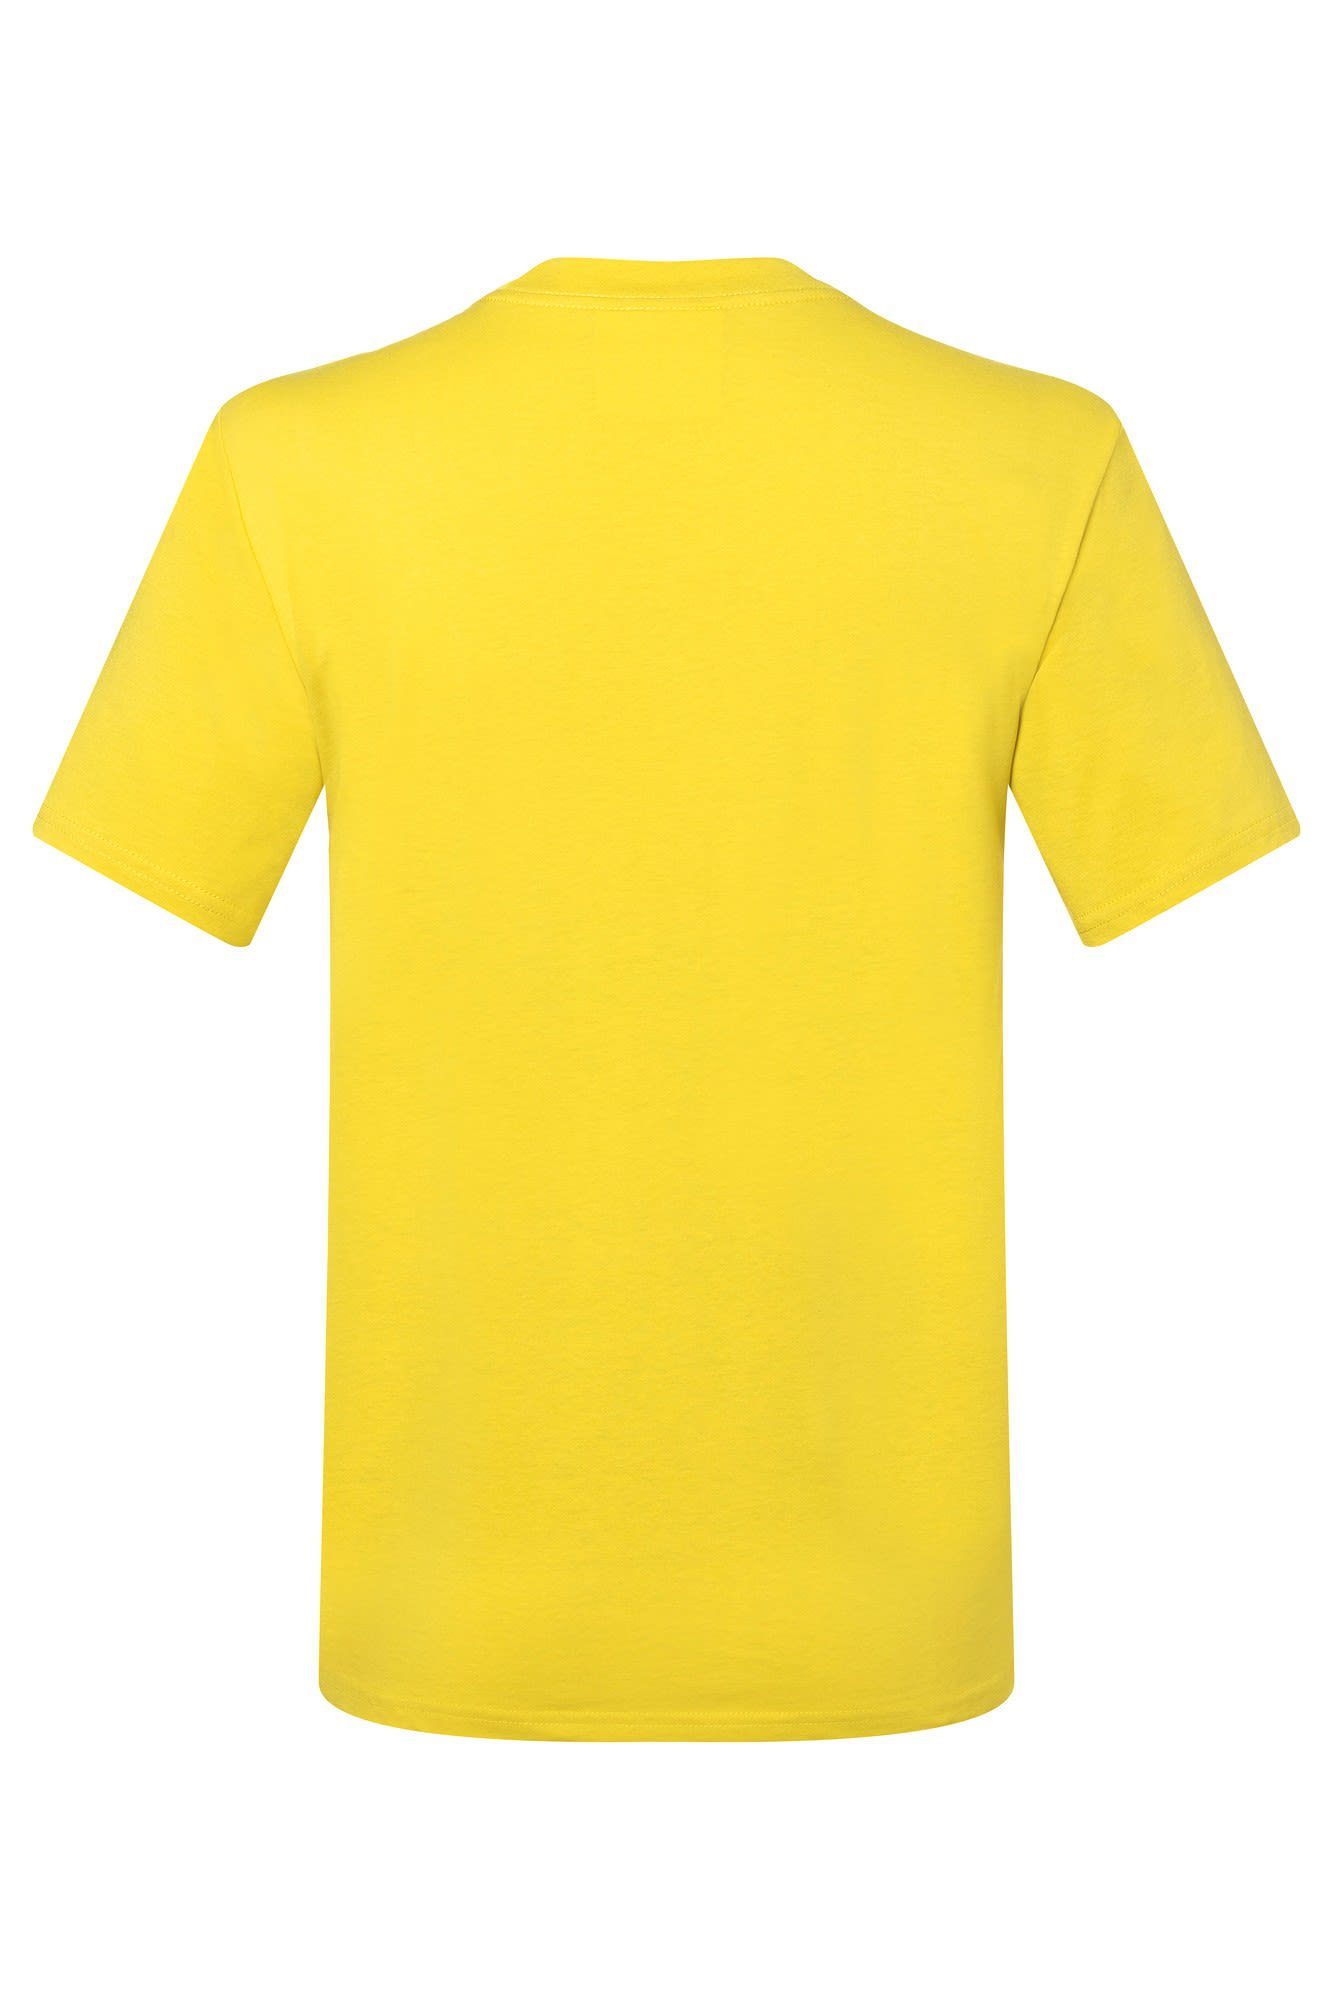 M Marmot Limelight Herren Tee Marmot Short-sleeve Coastal T-Shirt